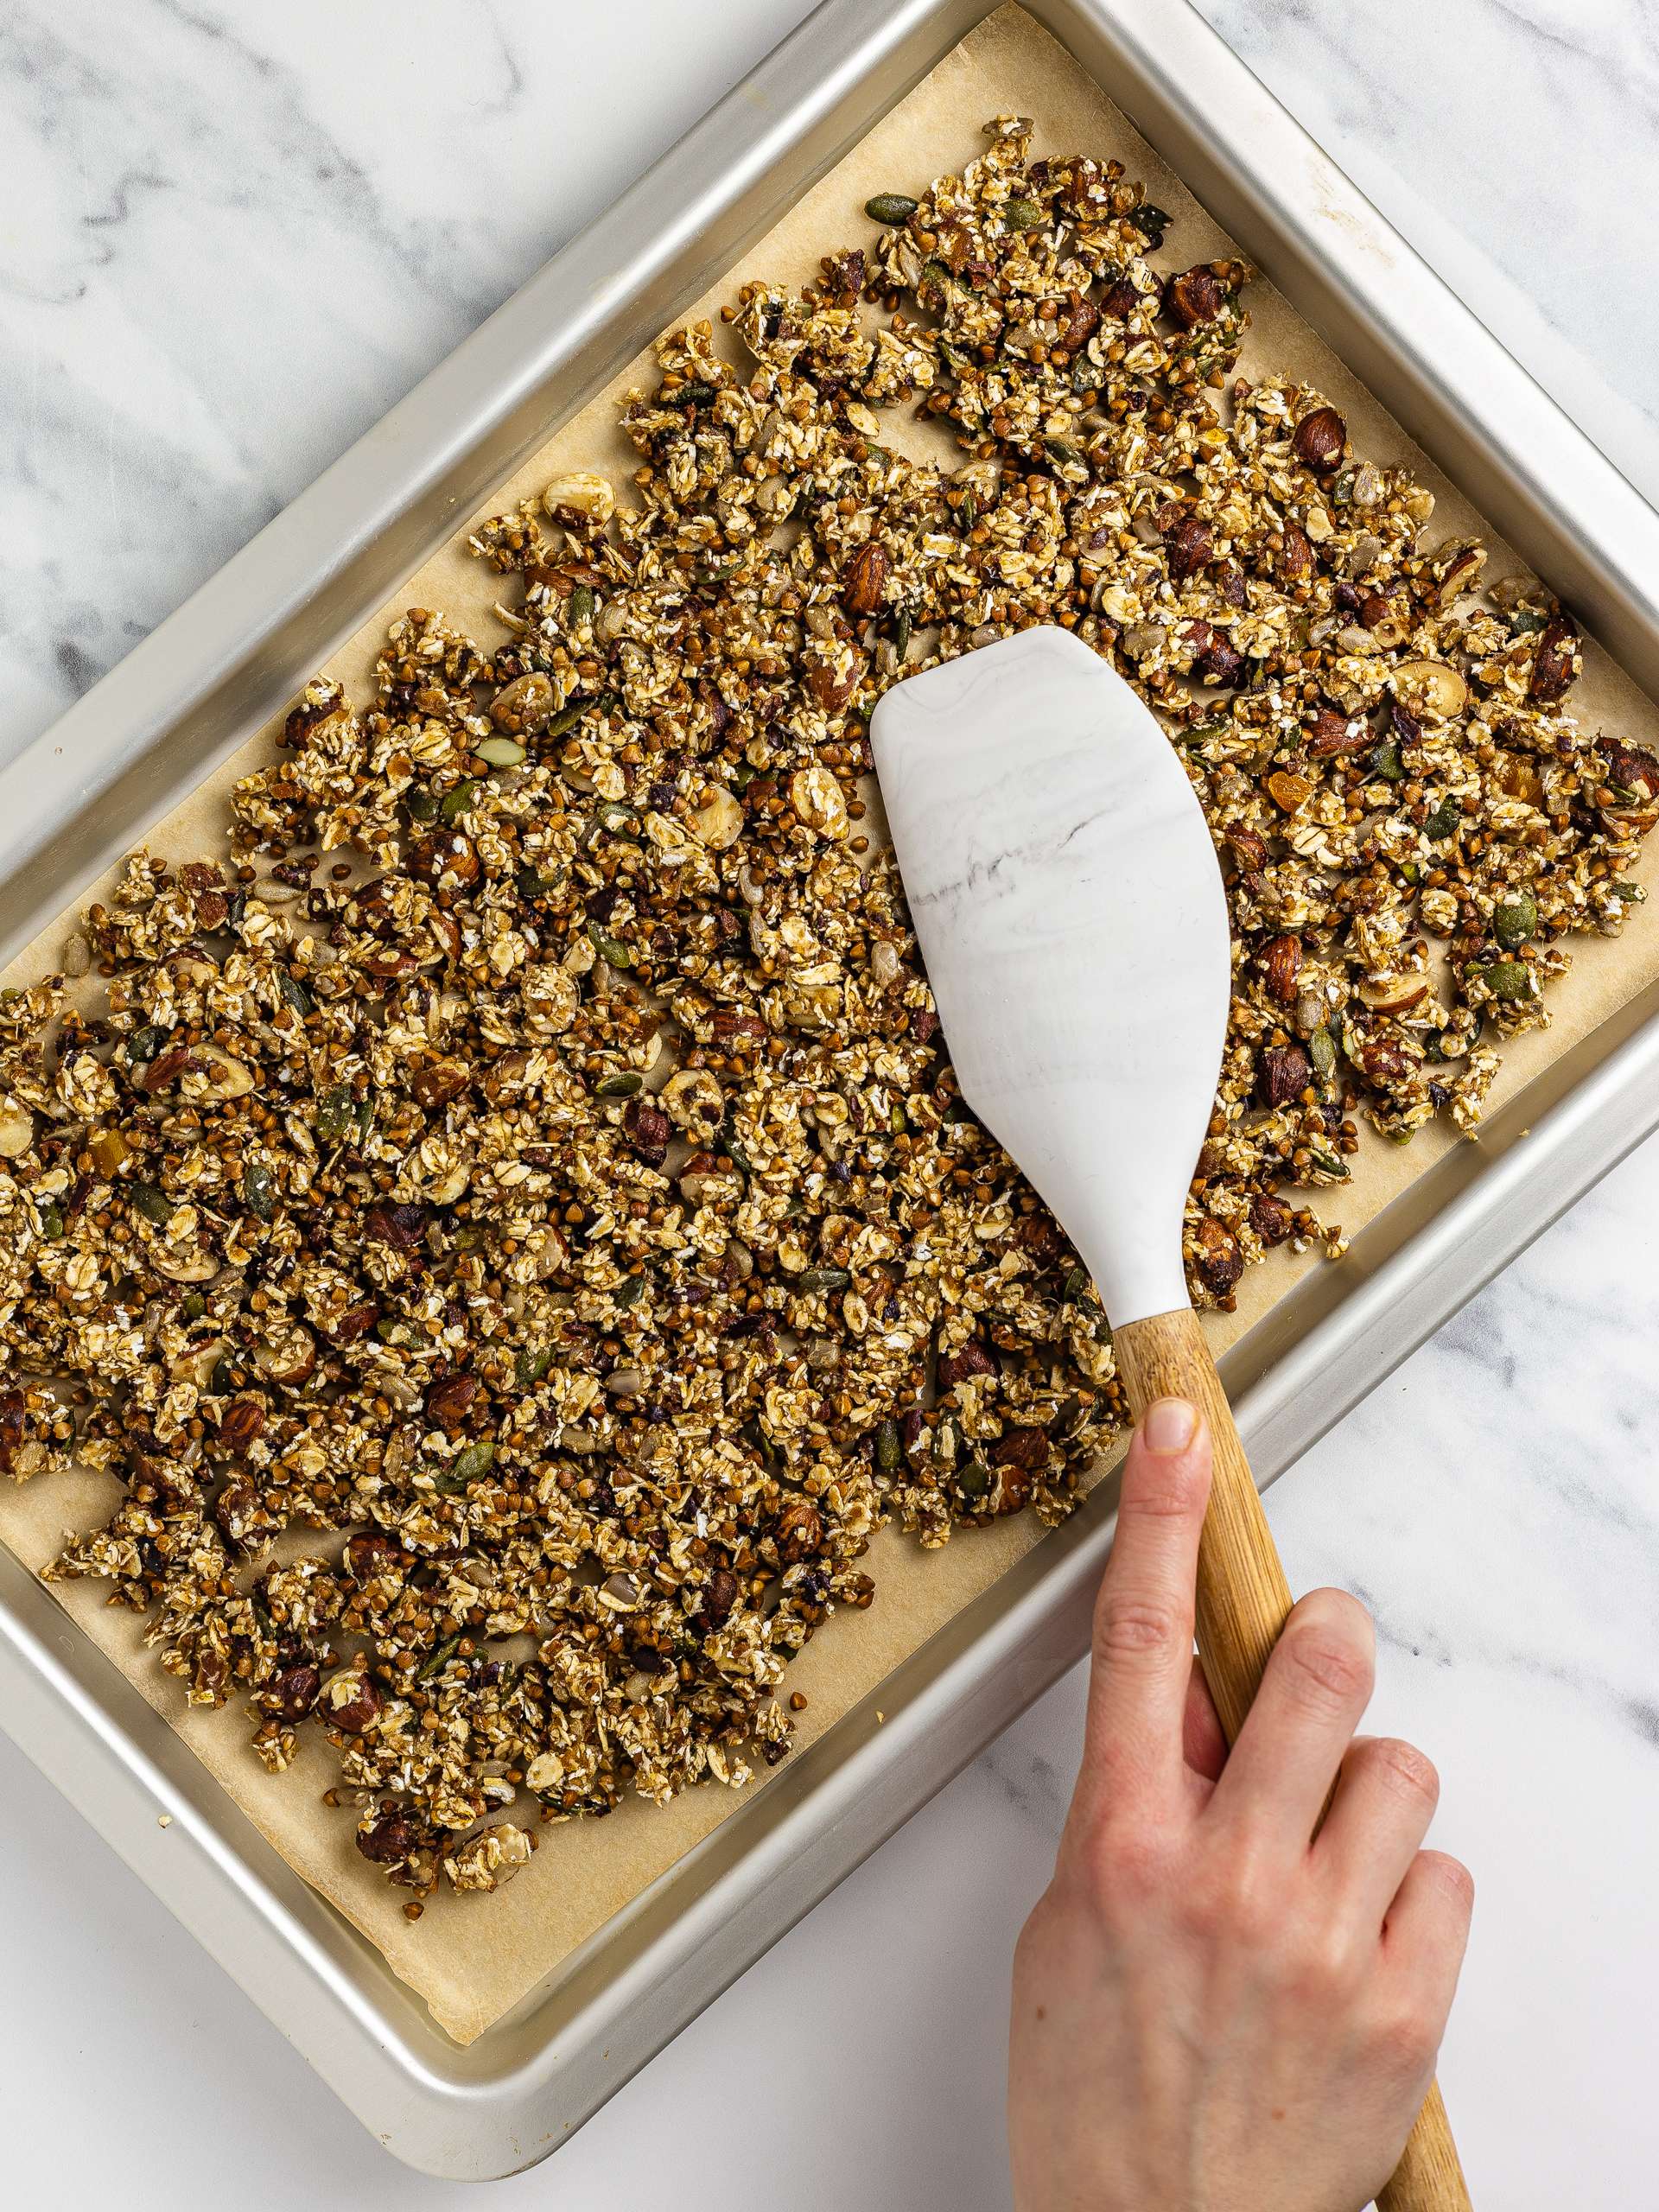 sugar-free granola spread over a baking tray